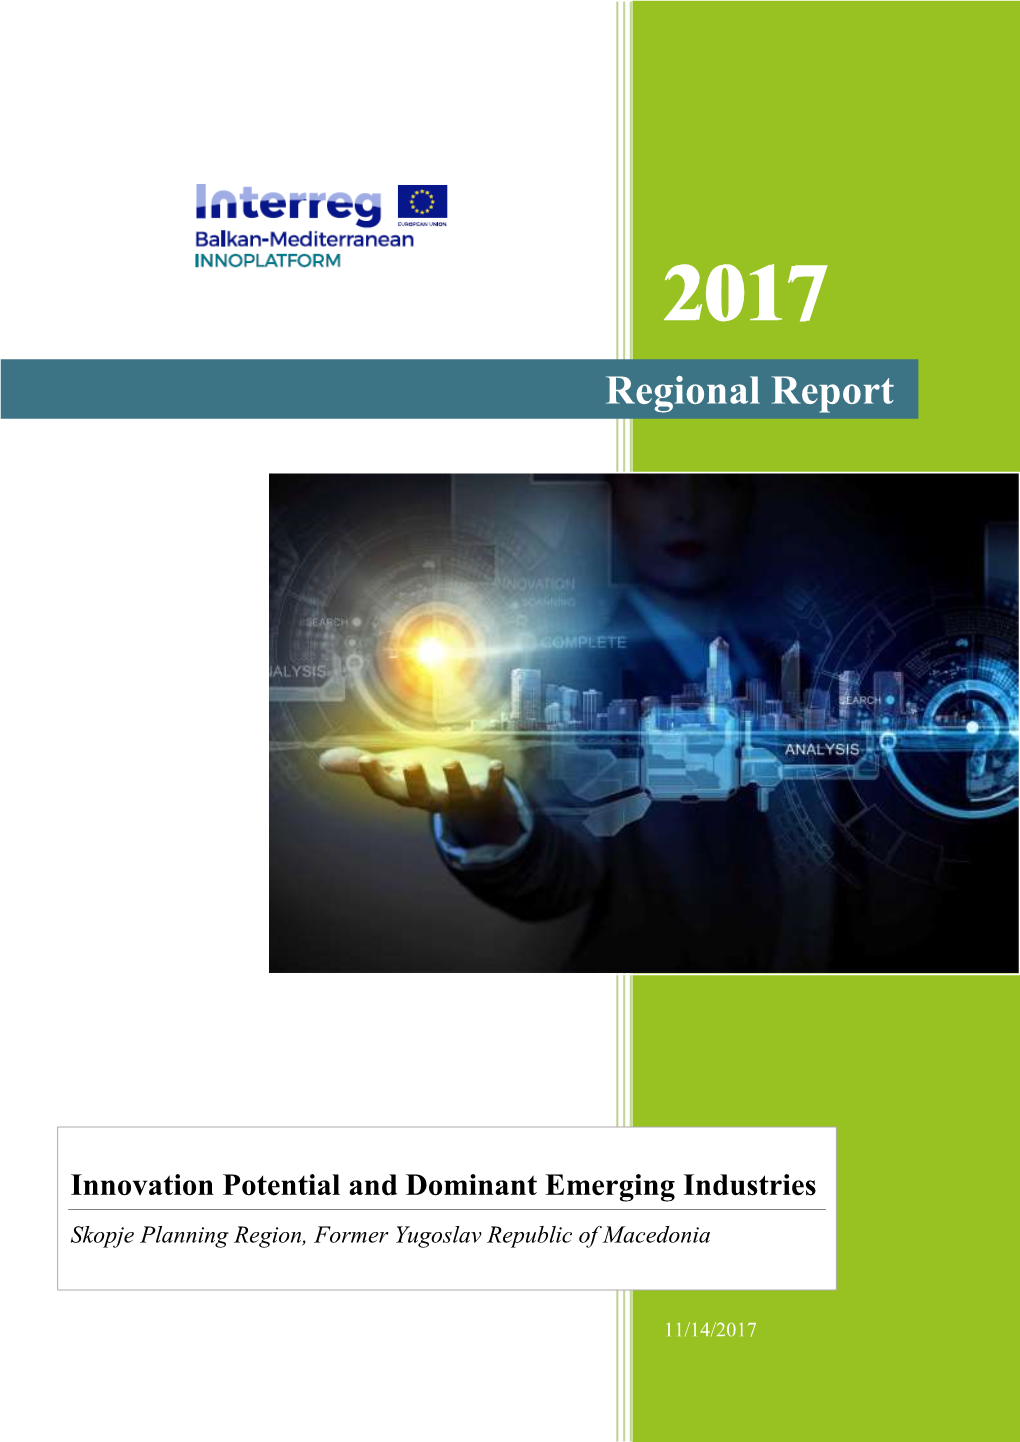 Report on Regional Dominant Emerging Industries